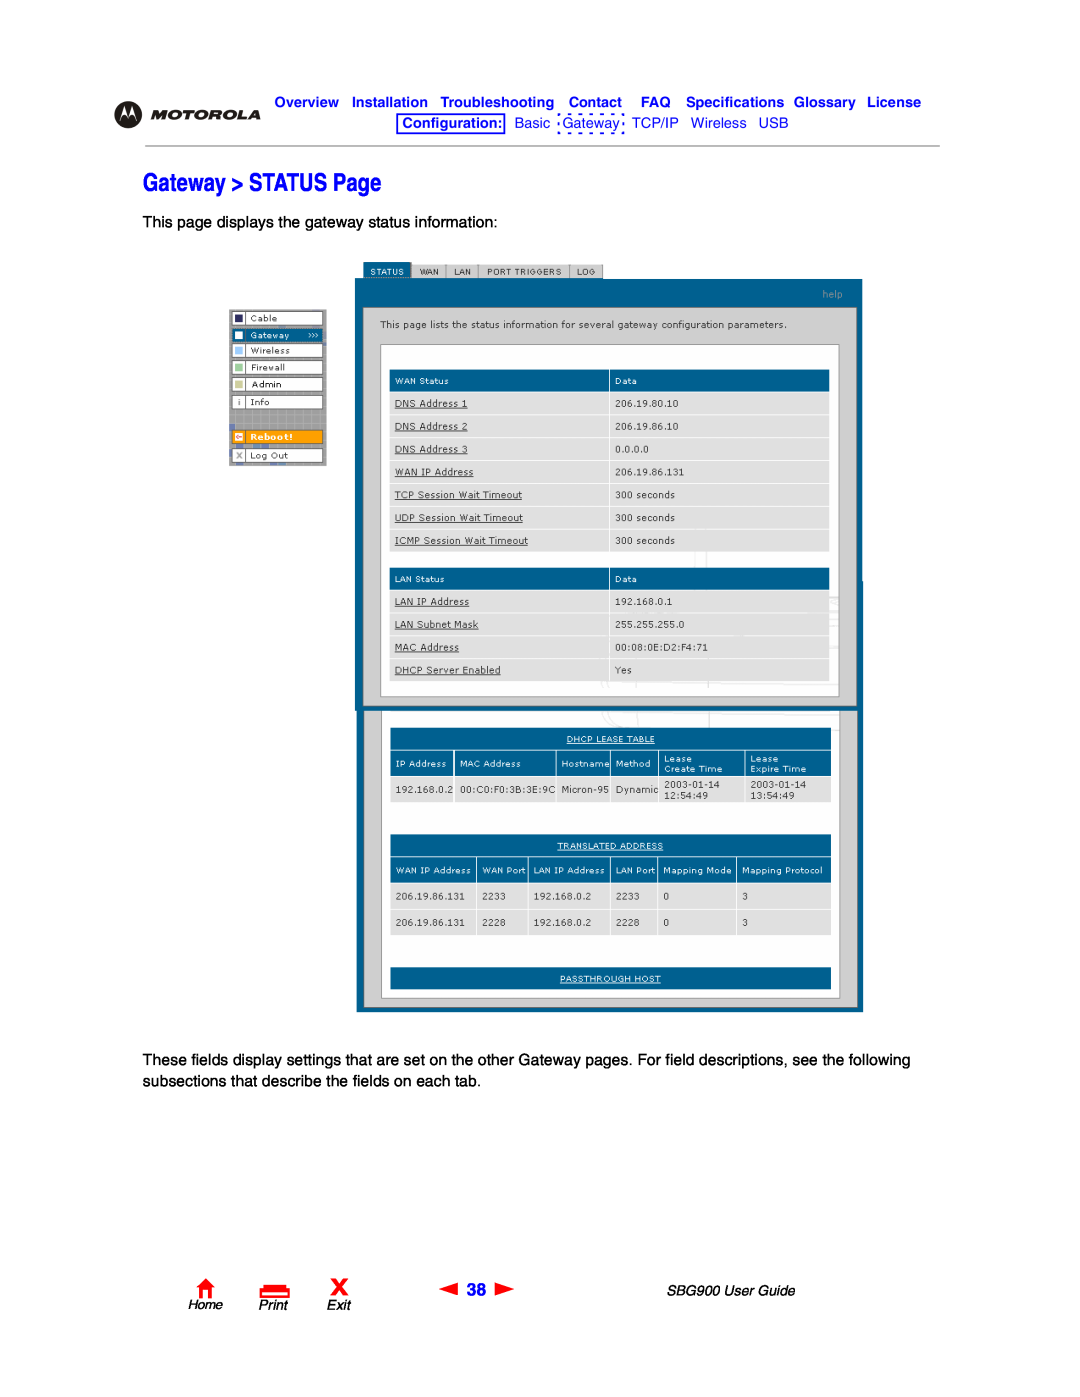 Motorola Gateway STATUS Page, This page displays the gateway status information, Home Print Exit, SBG900 User Guide 